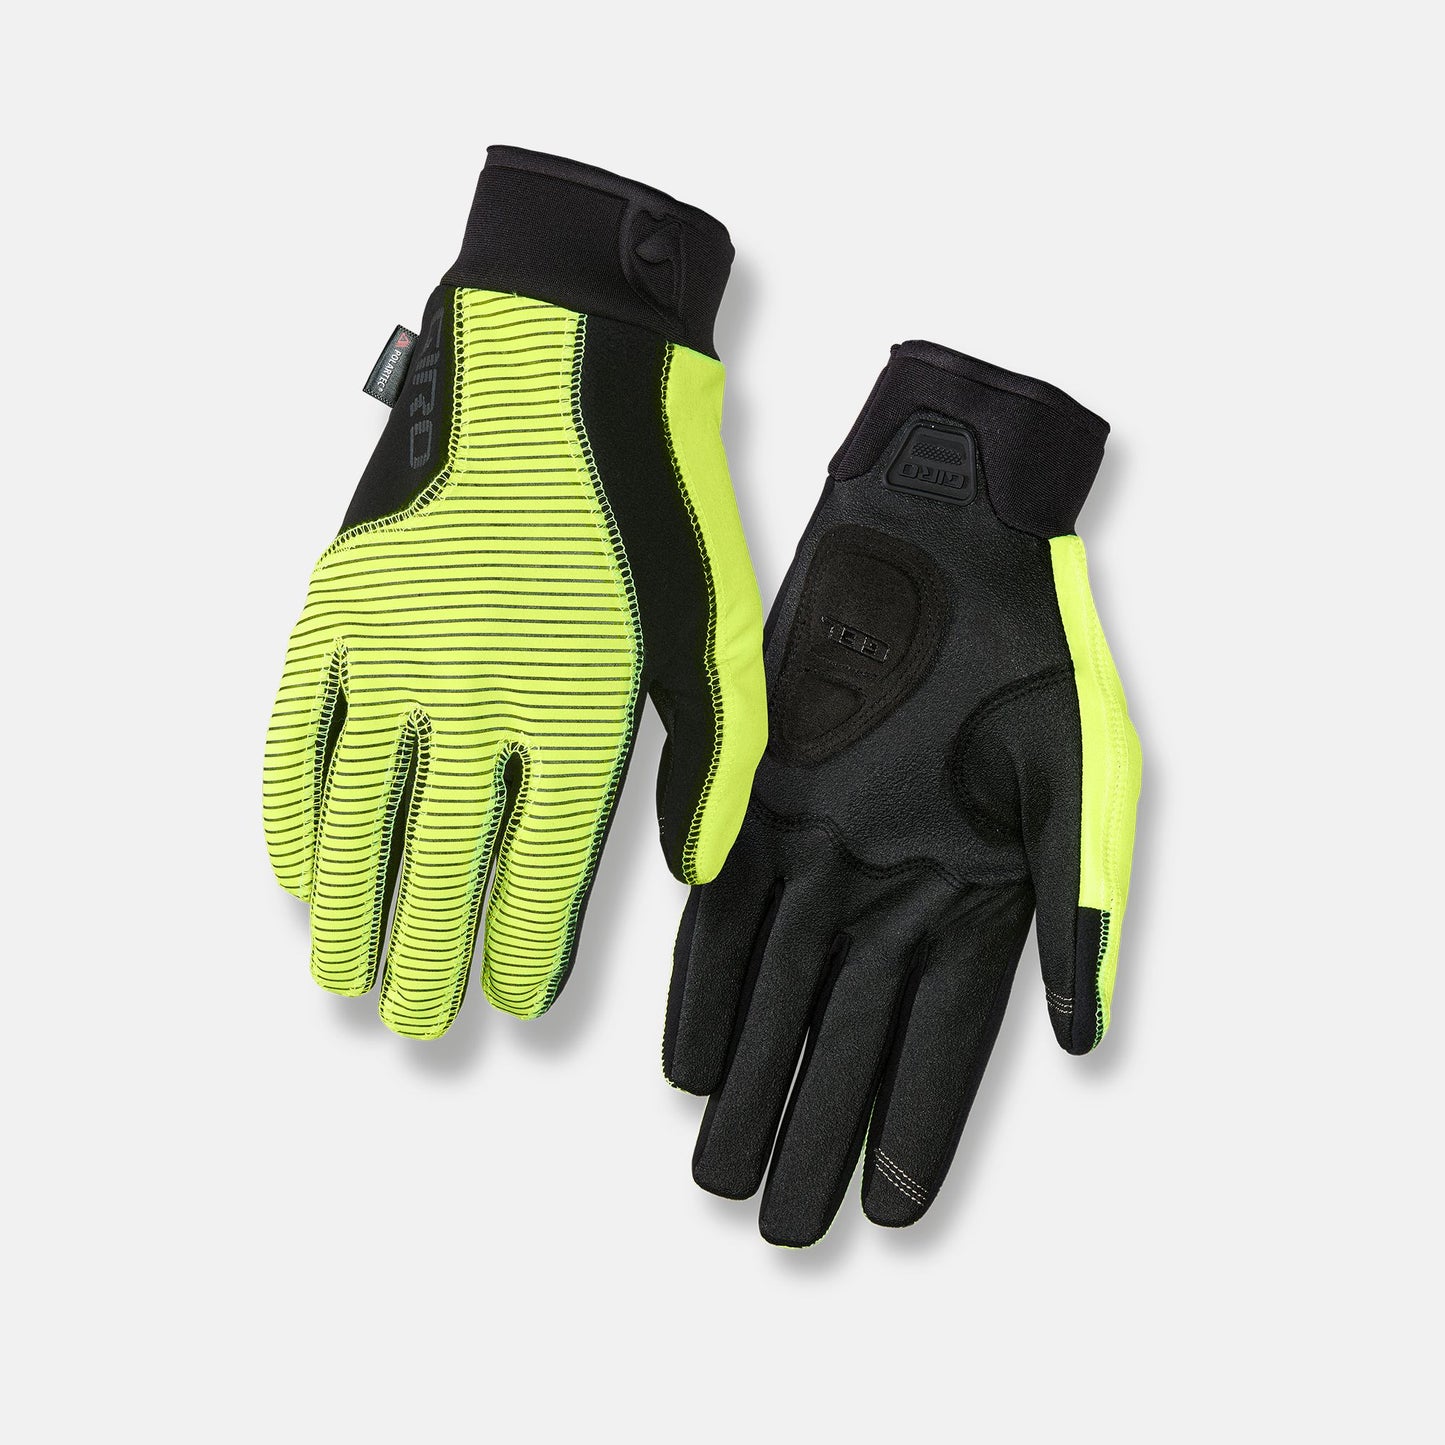 Giro Blaze 2.0 Winter Gloves - Highlight Yellow/Black - Size M